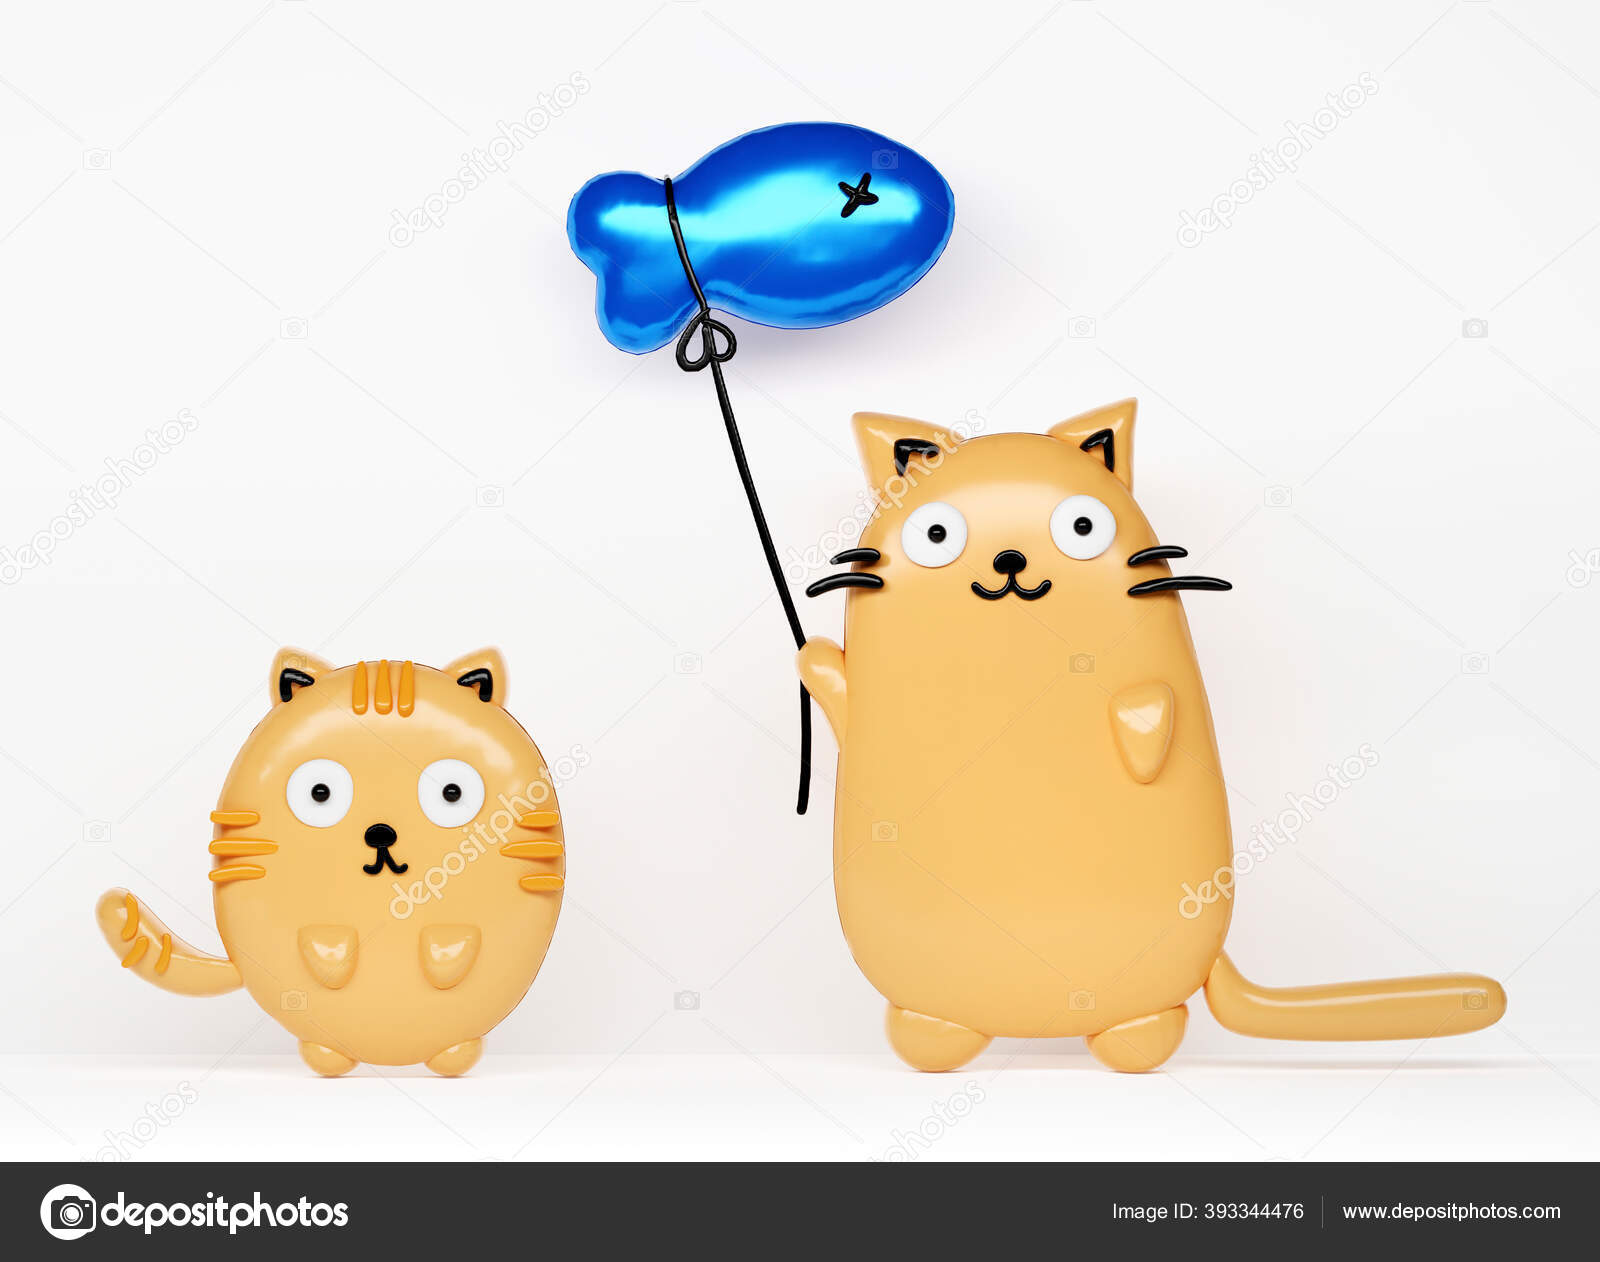 Very cute Cat with kitten and balloon fish, cartoon style. Animal